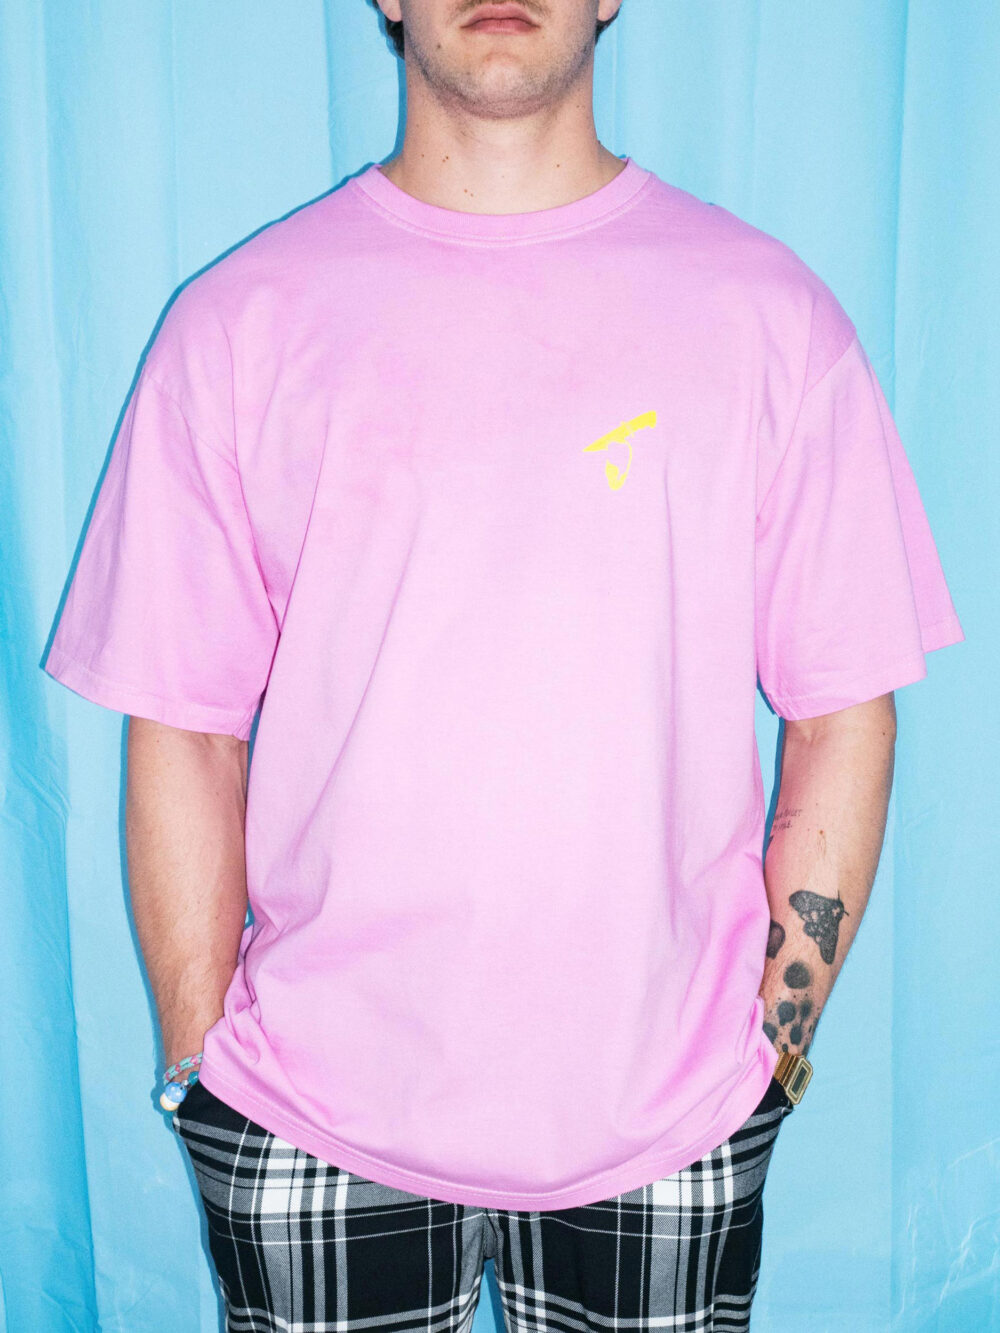 bb smalltalk shirt pink mood